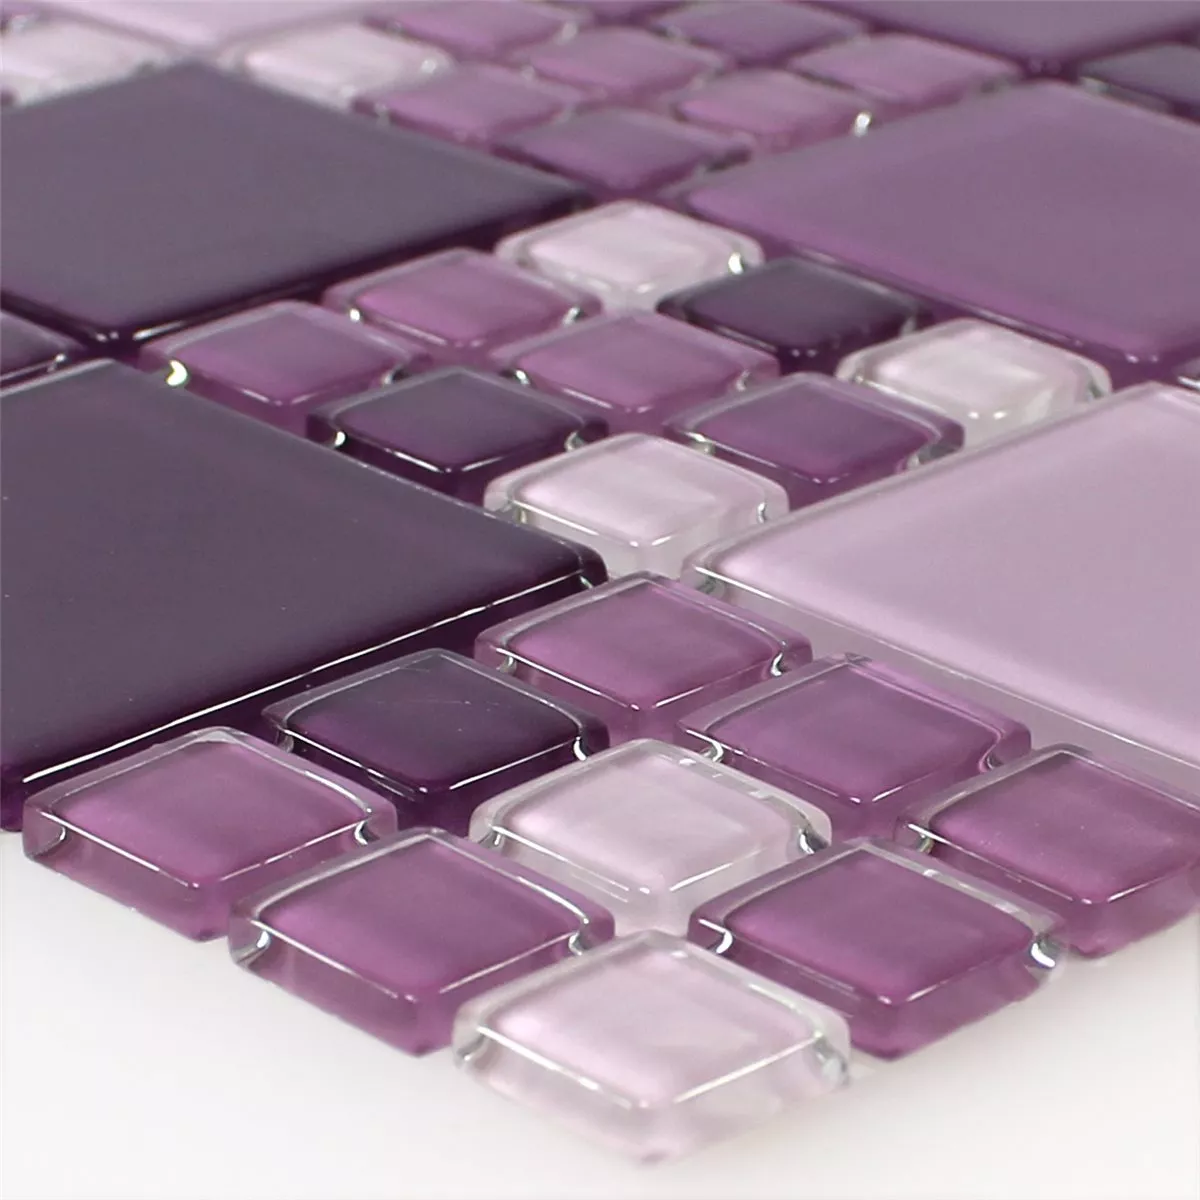 Mosaic Tiles Glass Purple Mix